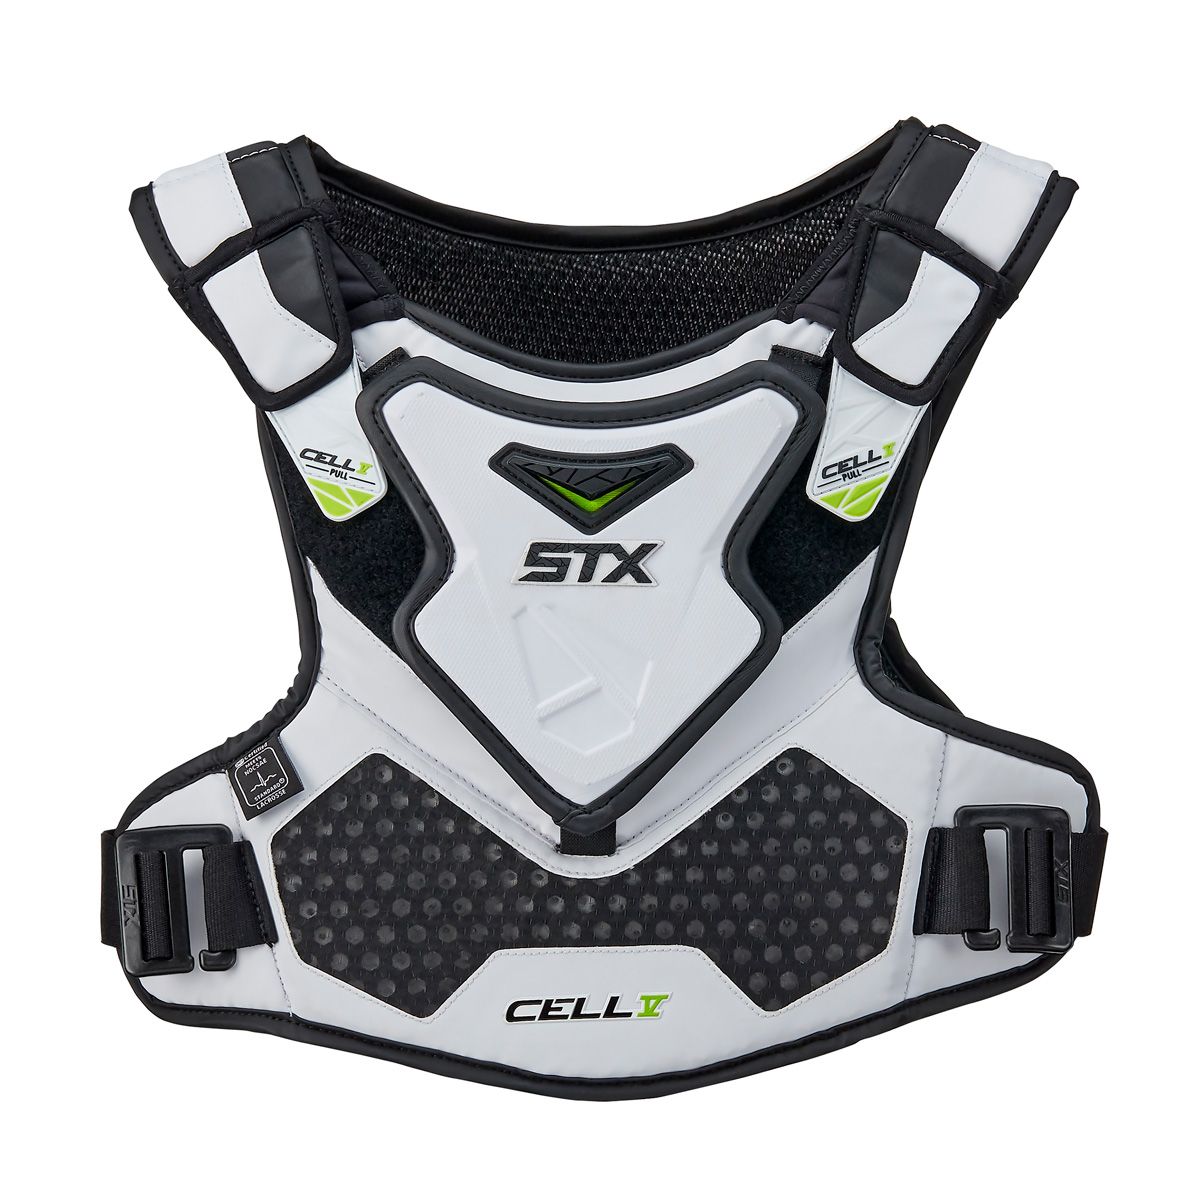 Nike Vapor Select Lacrosse Arm Pad